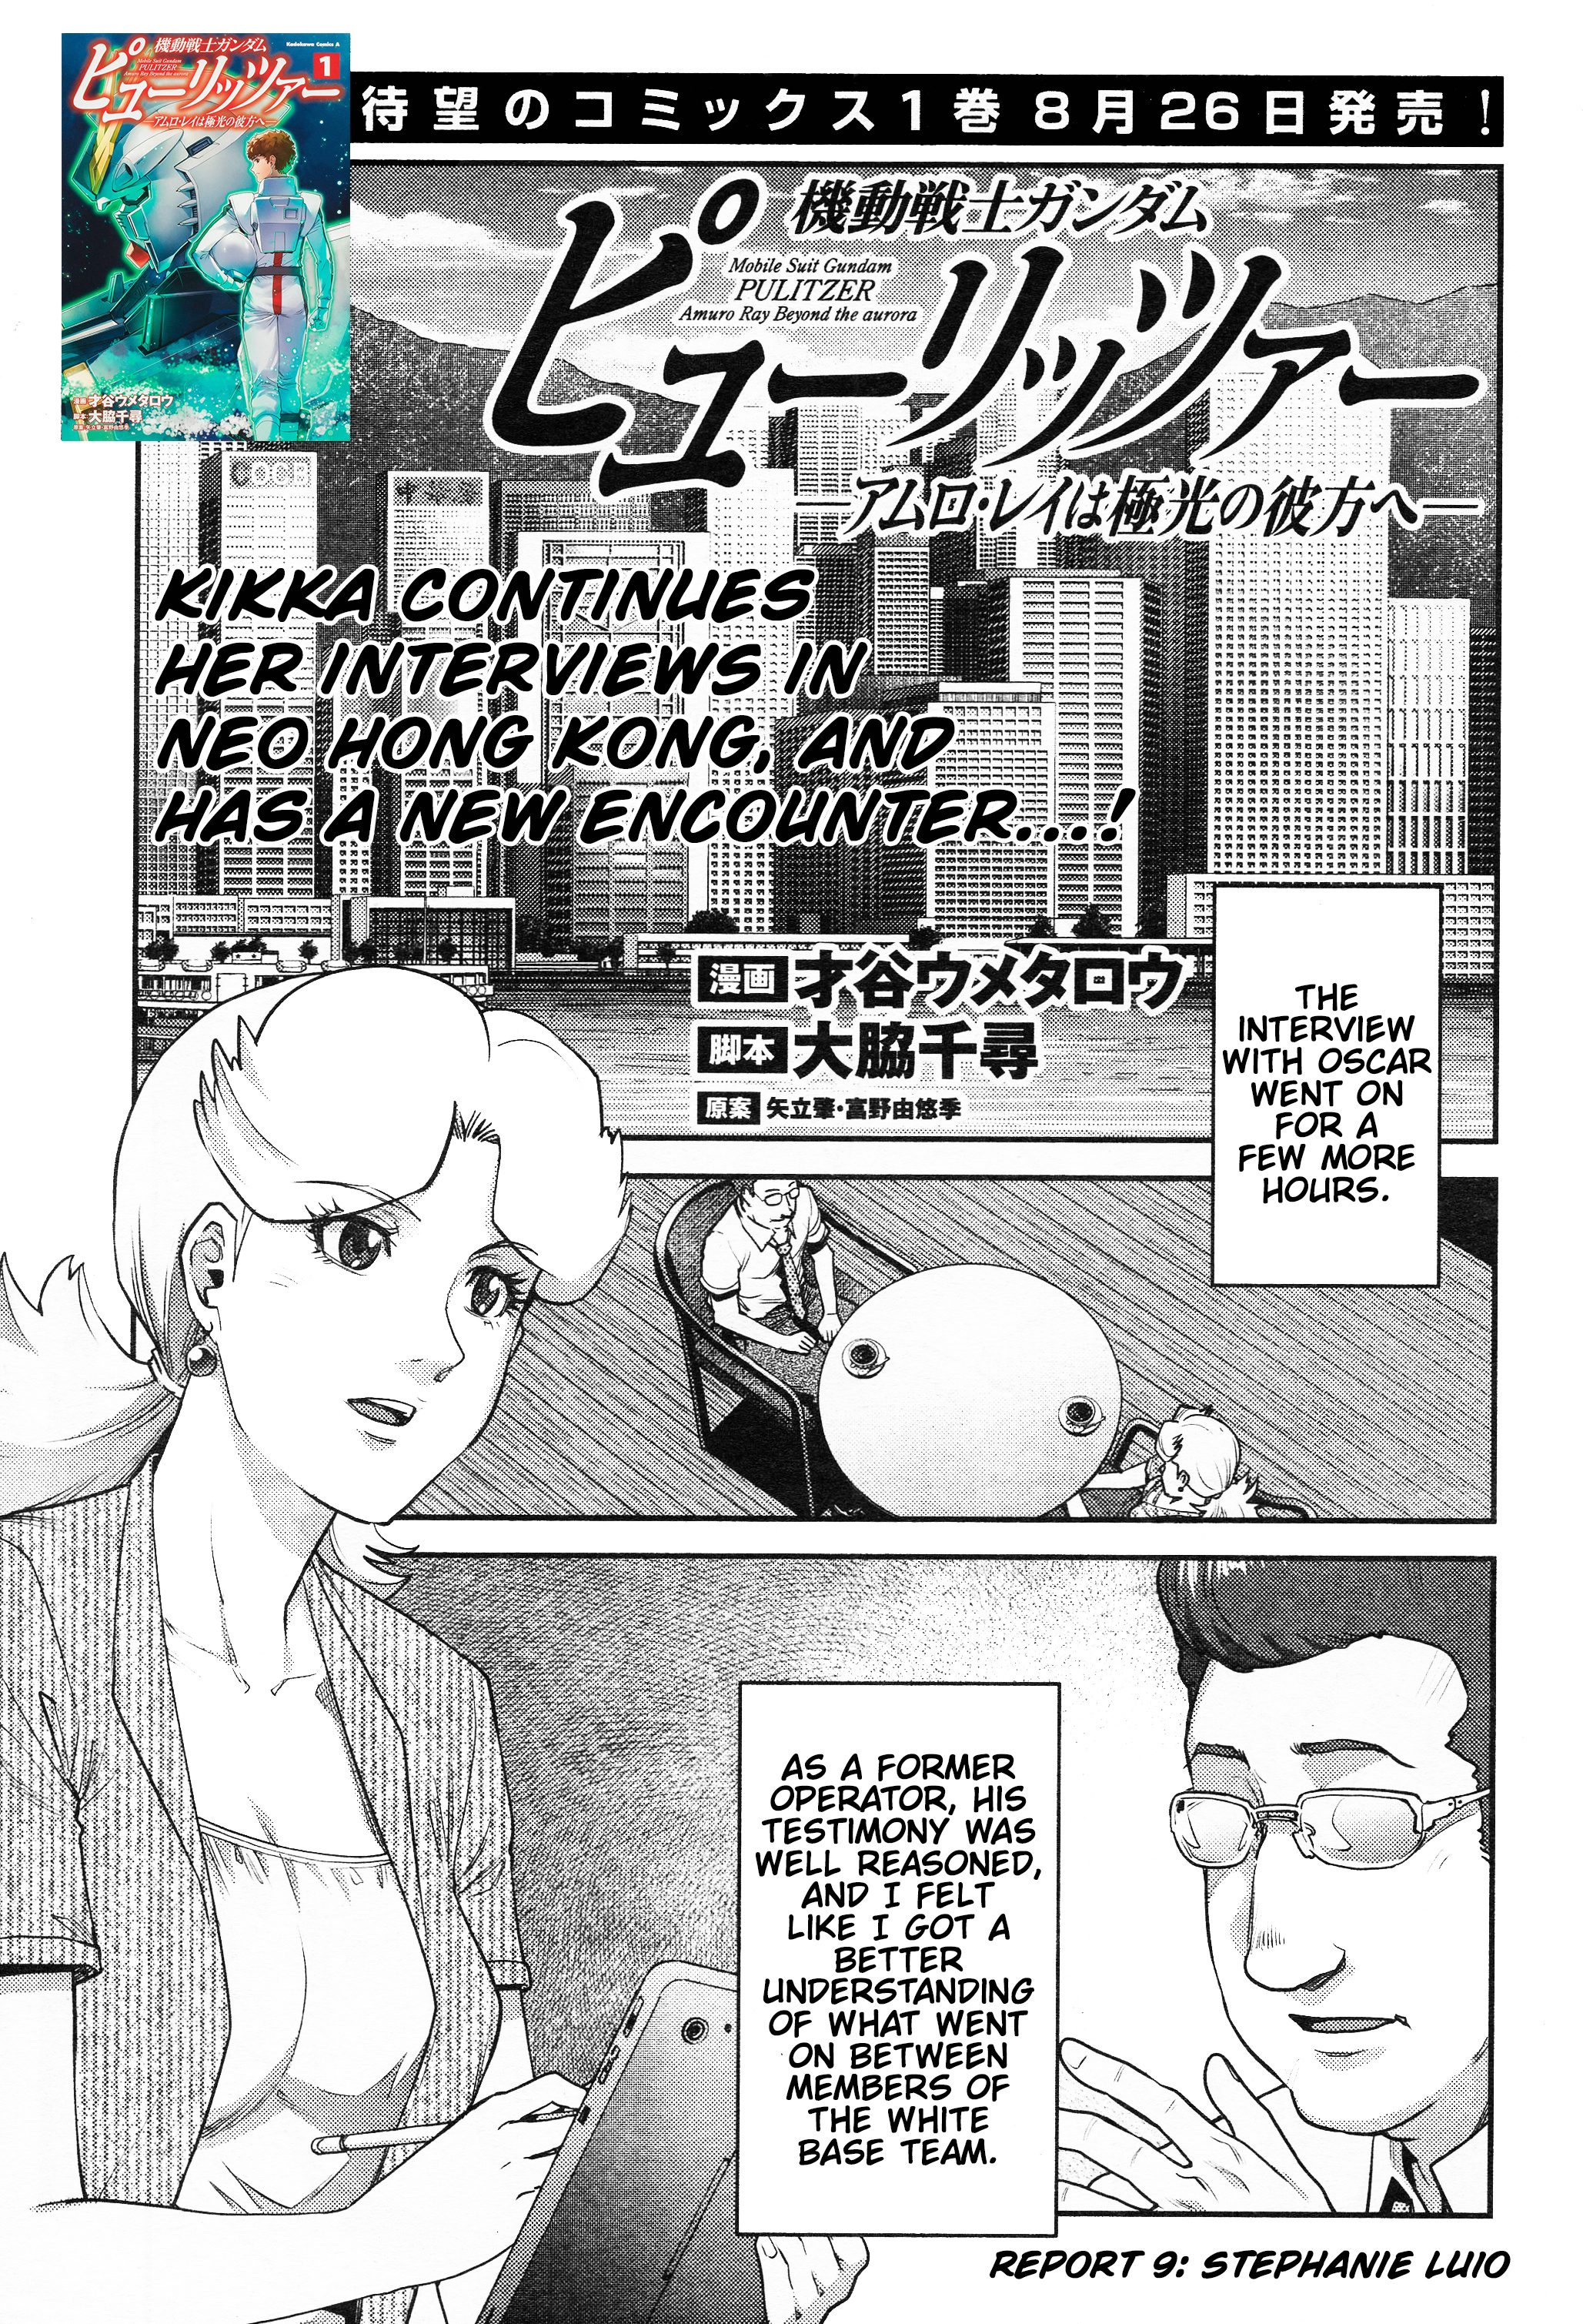 Mobile Suit Gundam Pulitzer - Amuro Ray Beyond The Aurora - Page 1